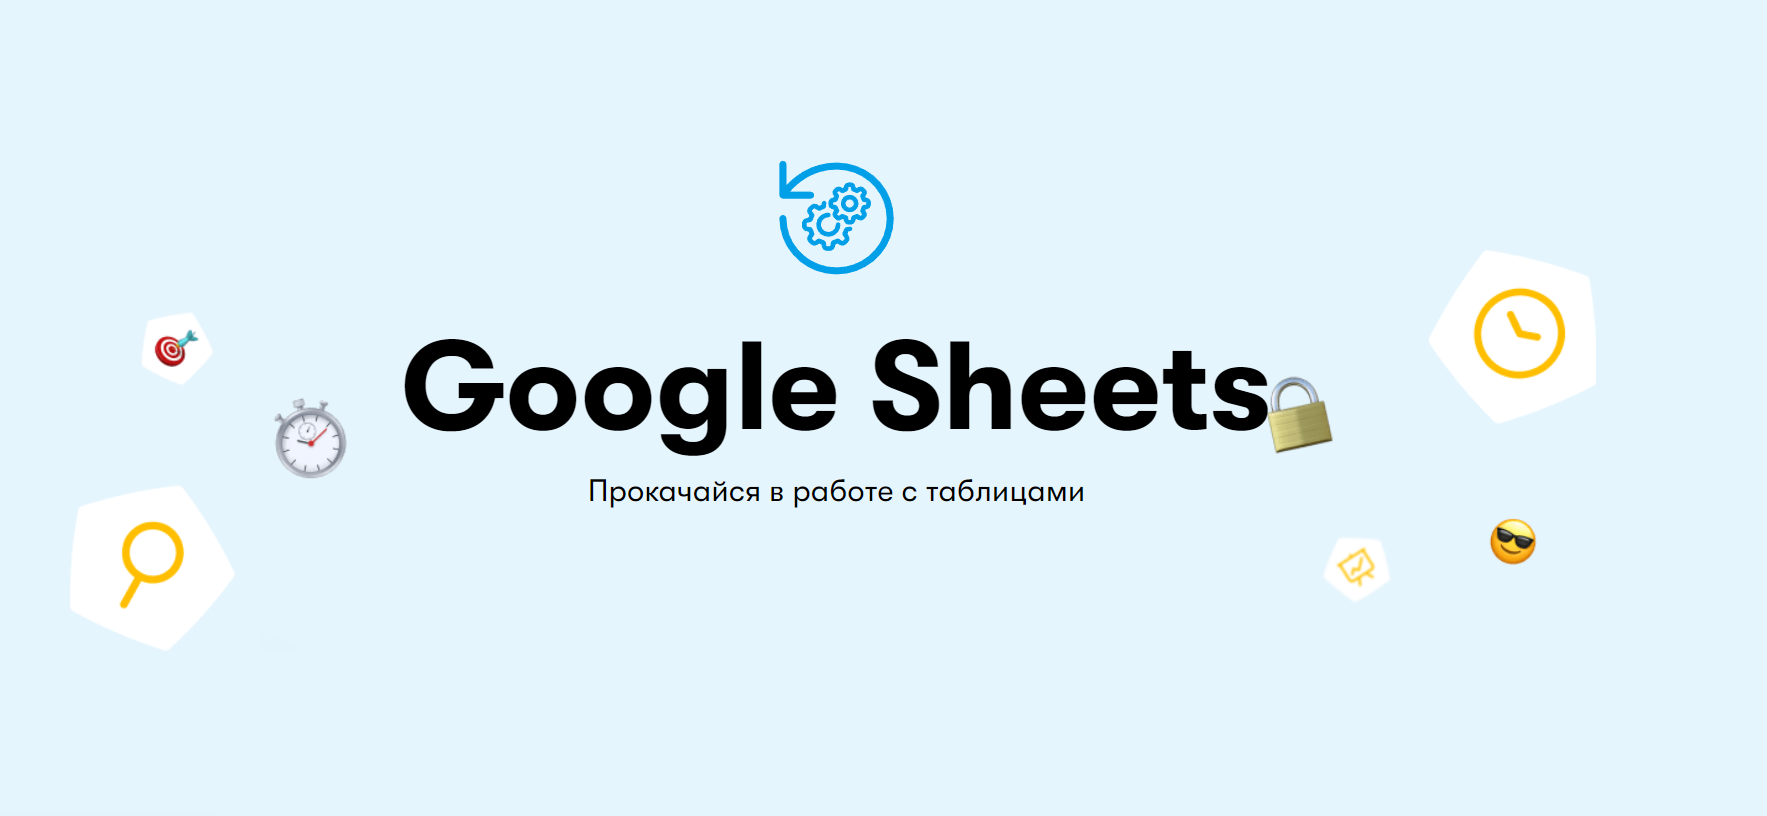 Курс “Google Sheets”